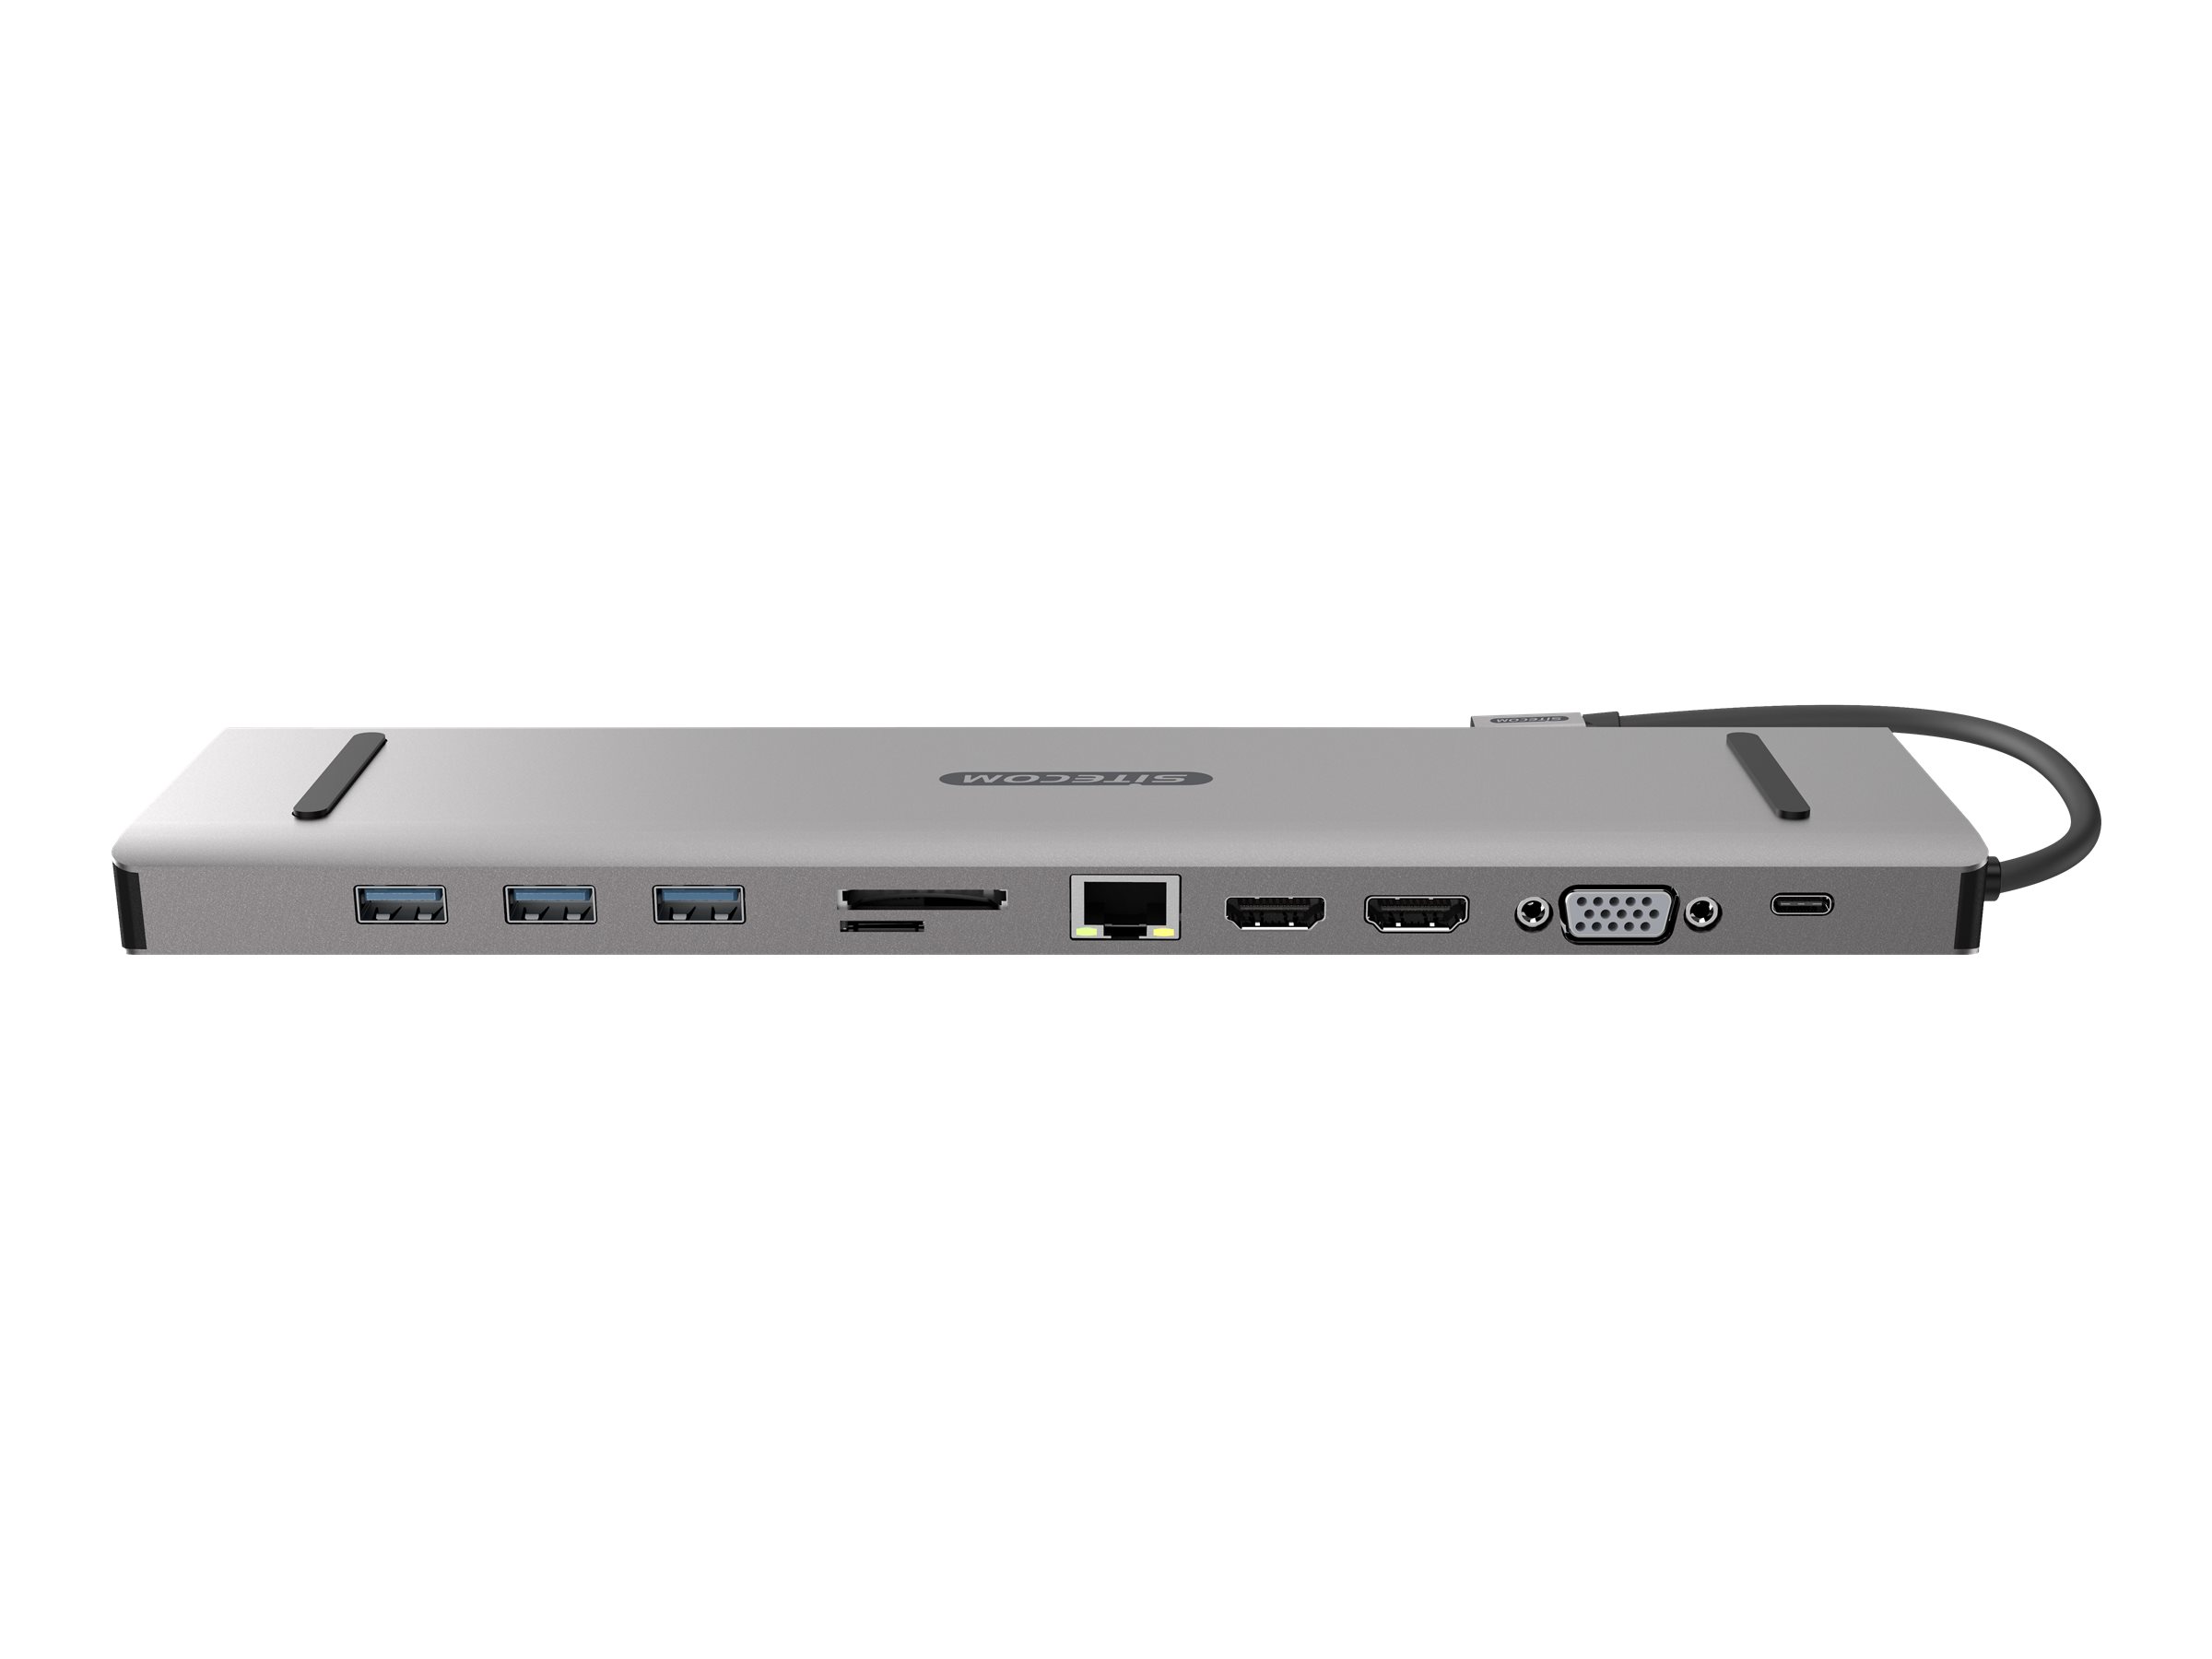 Sitecom CN 389 Multiport Pro Dock - Dockingstation - USB-C 3.1 - VGA, 2 x HDMI - GigE